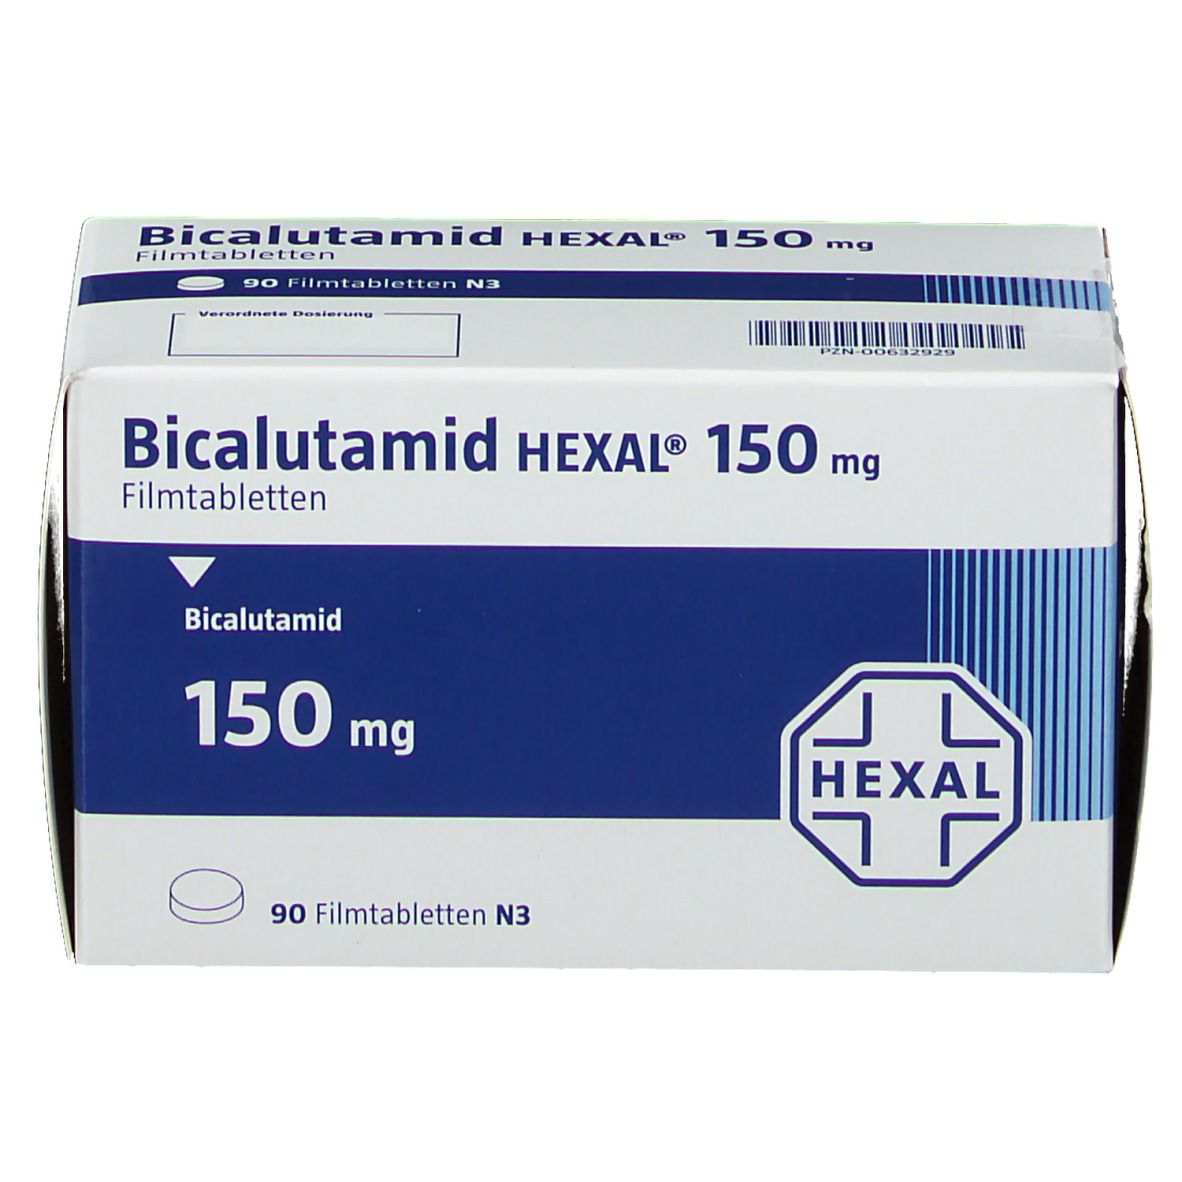 Bicalutamid HEXAL® 150 mg